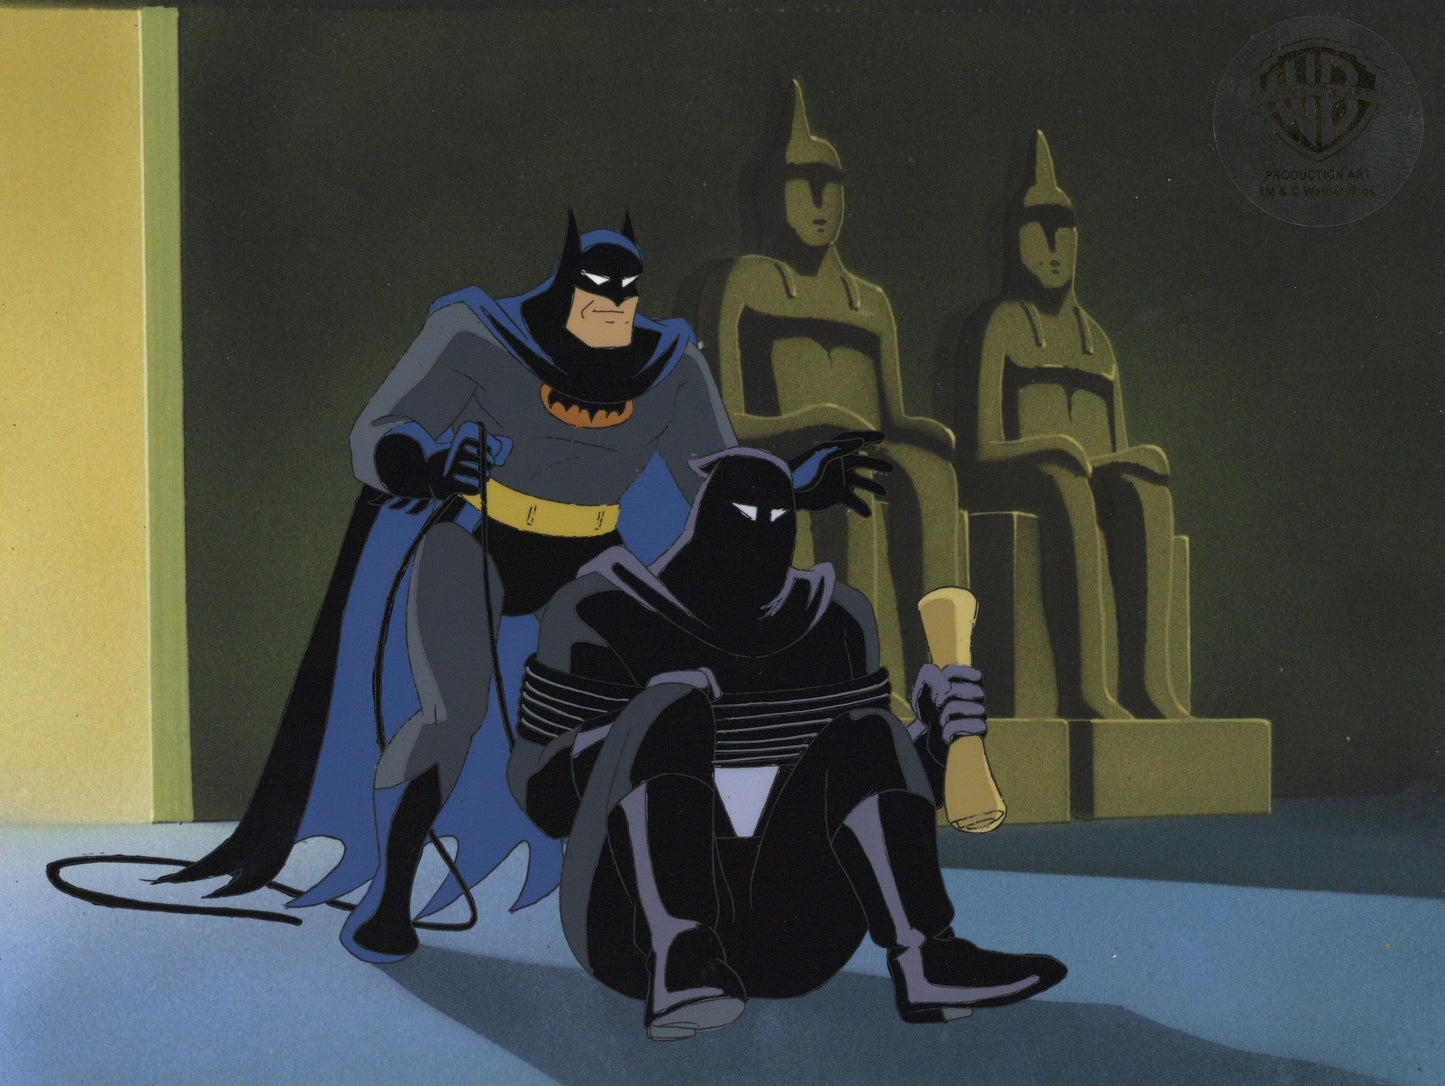 Batman The Animated Series Original Production Cel: Batman and Ubu